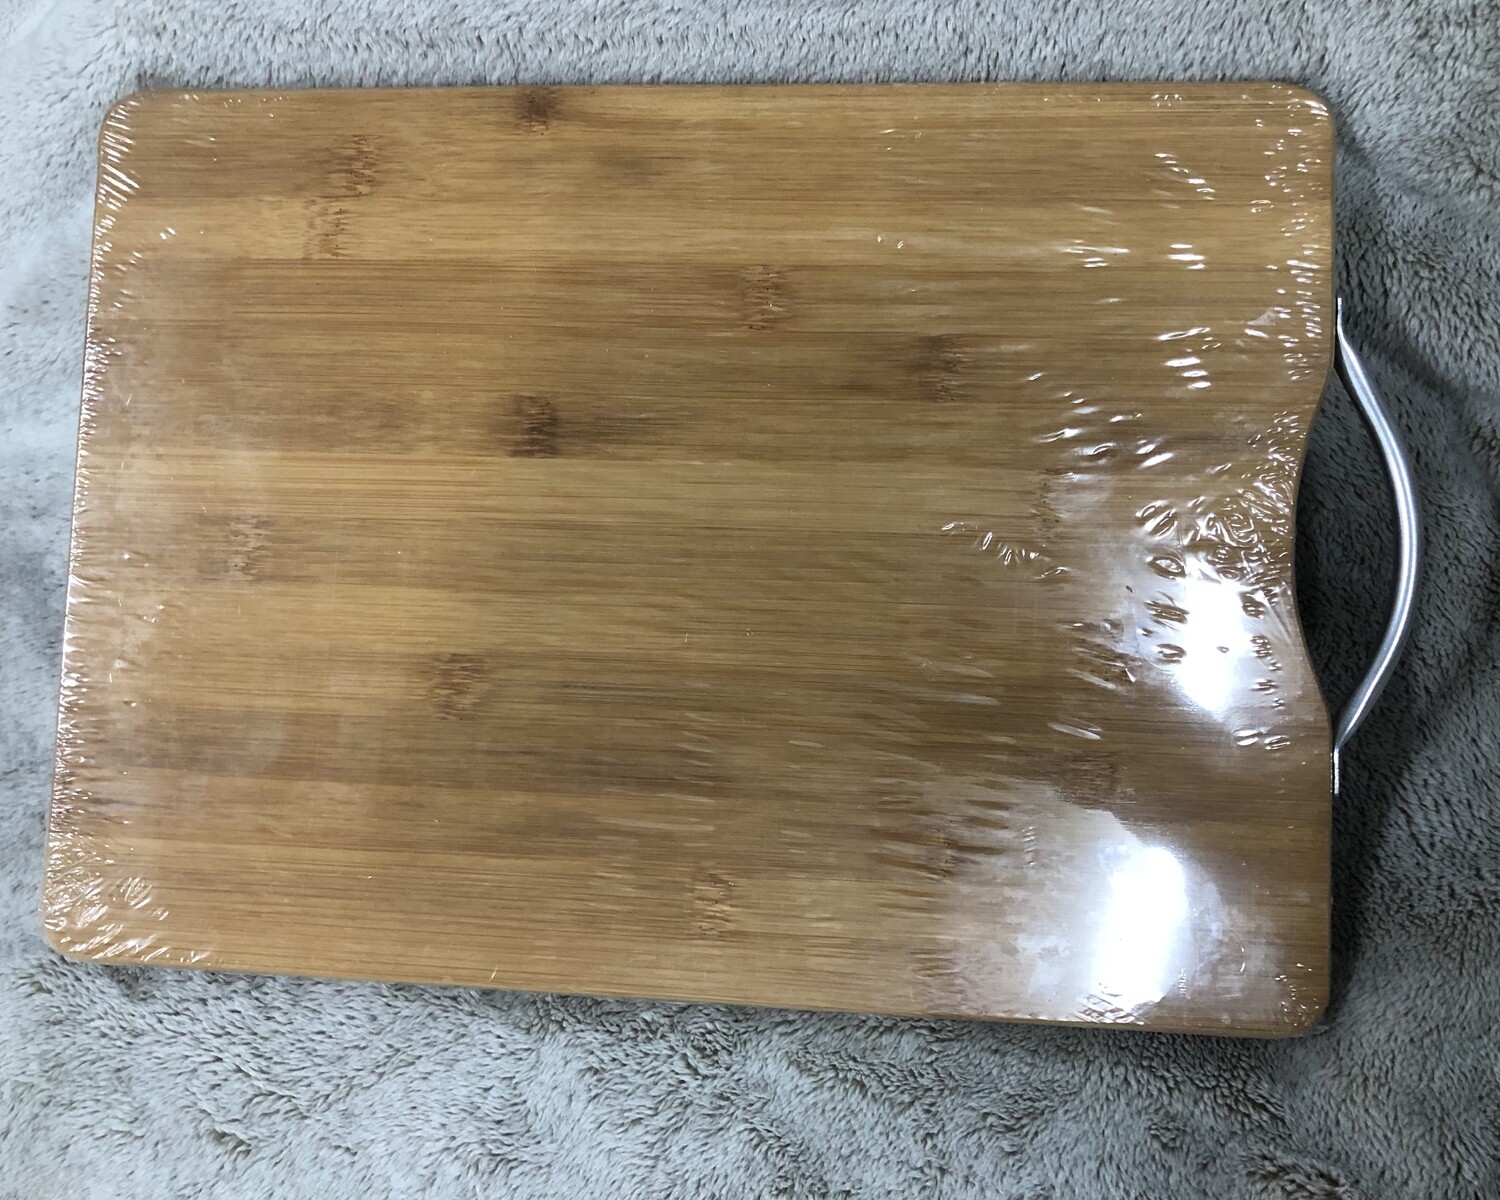 Jinzifeng Large Wooden Cutting Board - 34cm x 26cm - Premium Quality